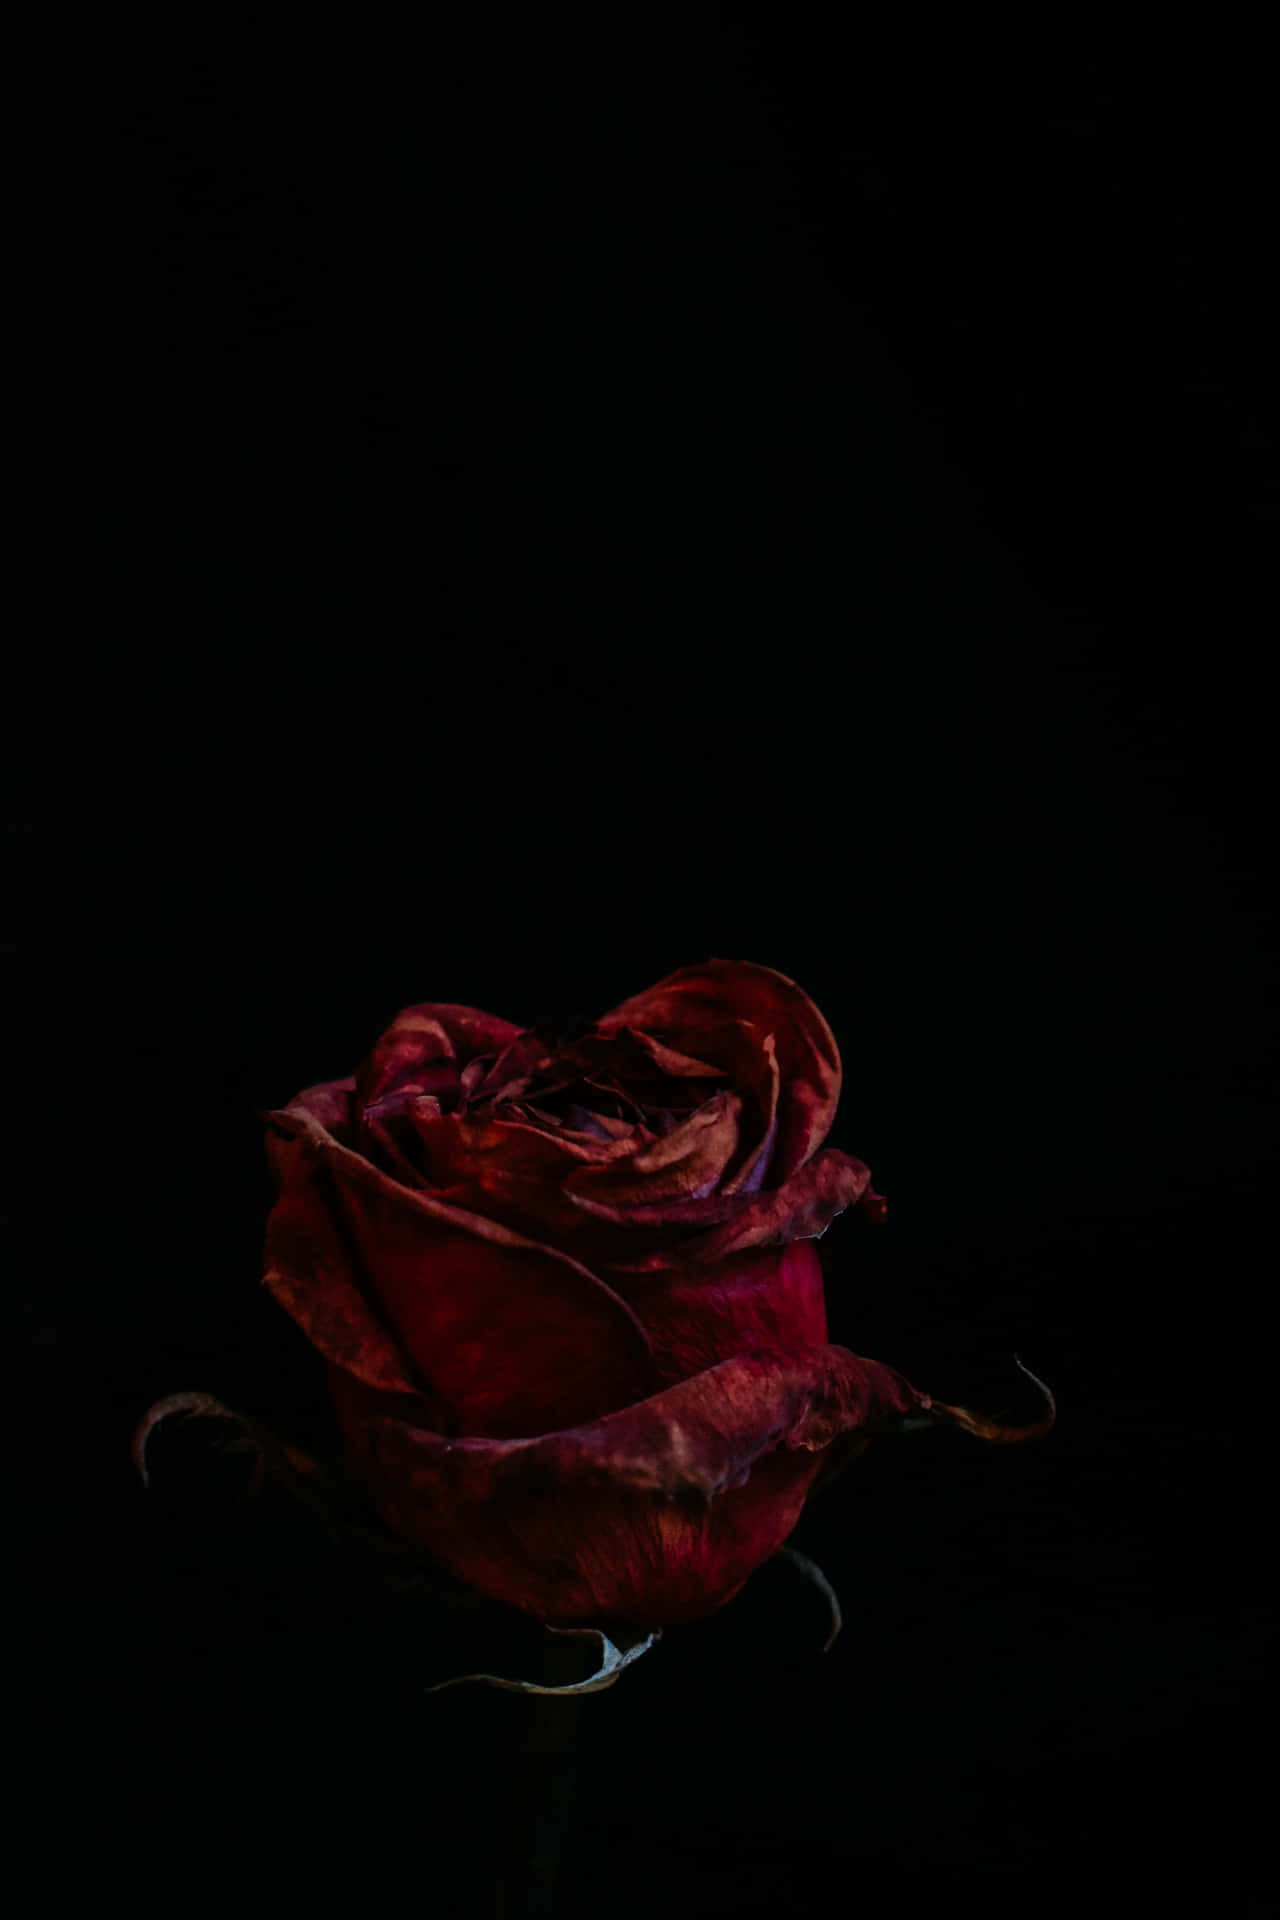 Blood Aesthetic Red Rose Black Background Wallpaper